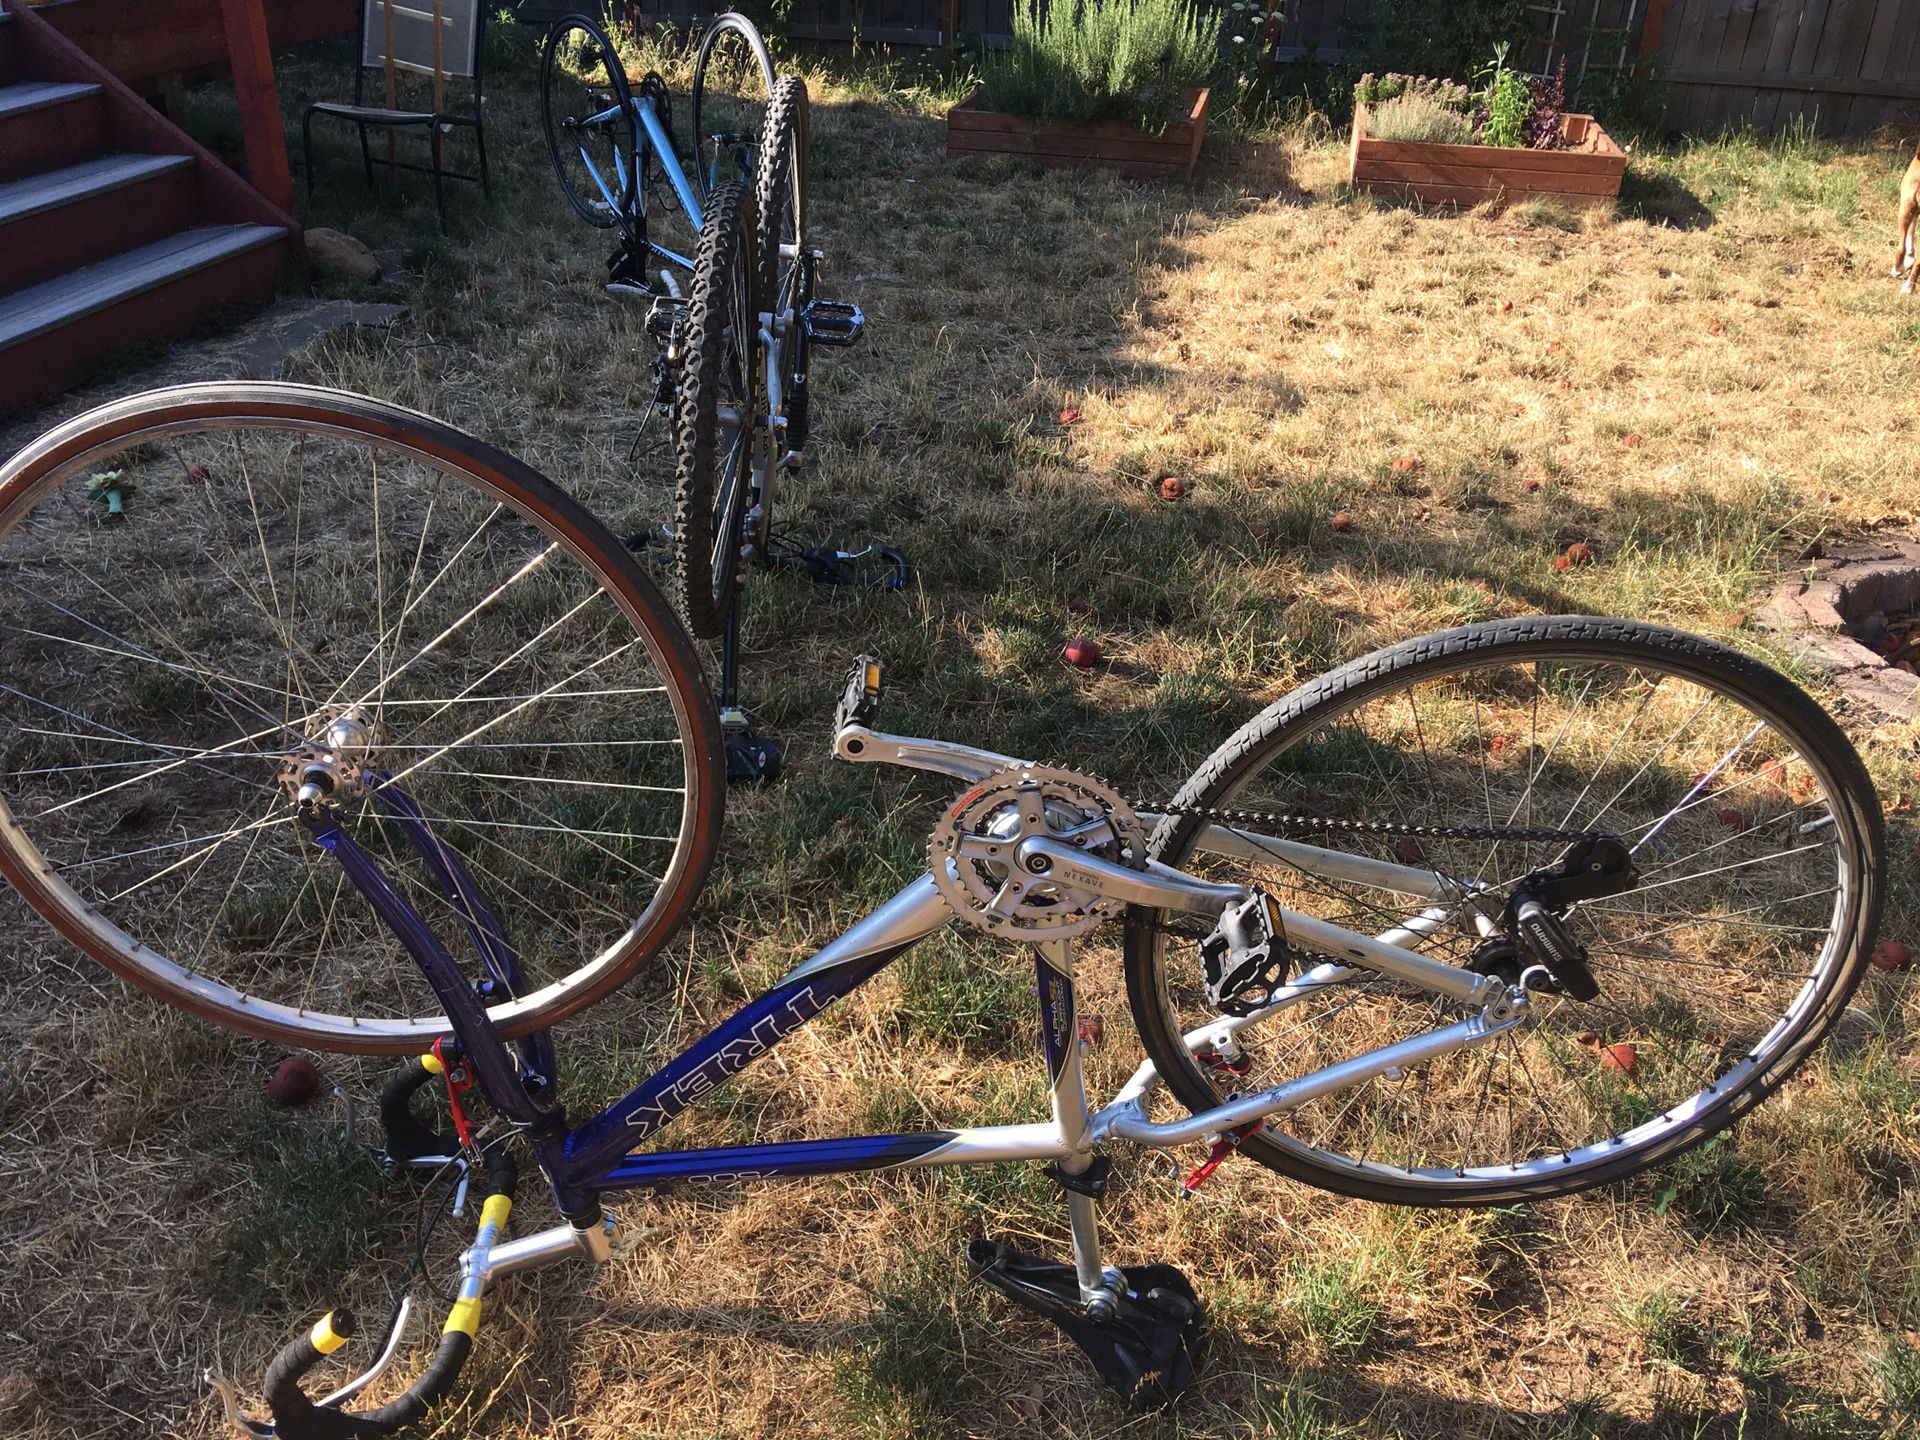 Bikes for sale- need maintenance